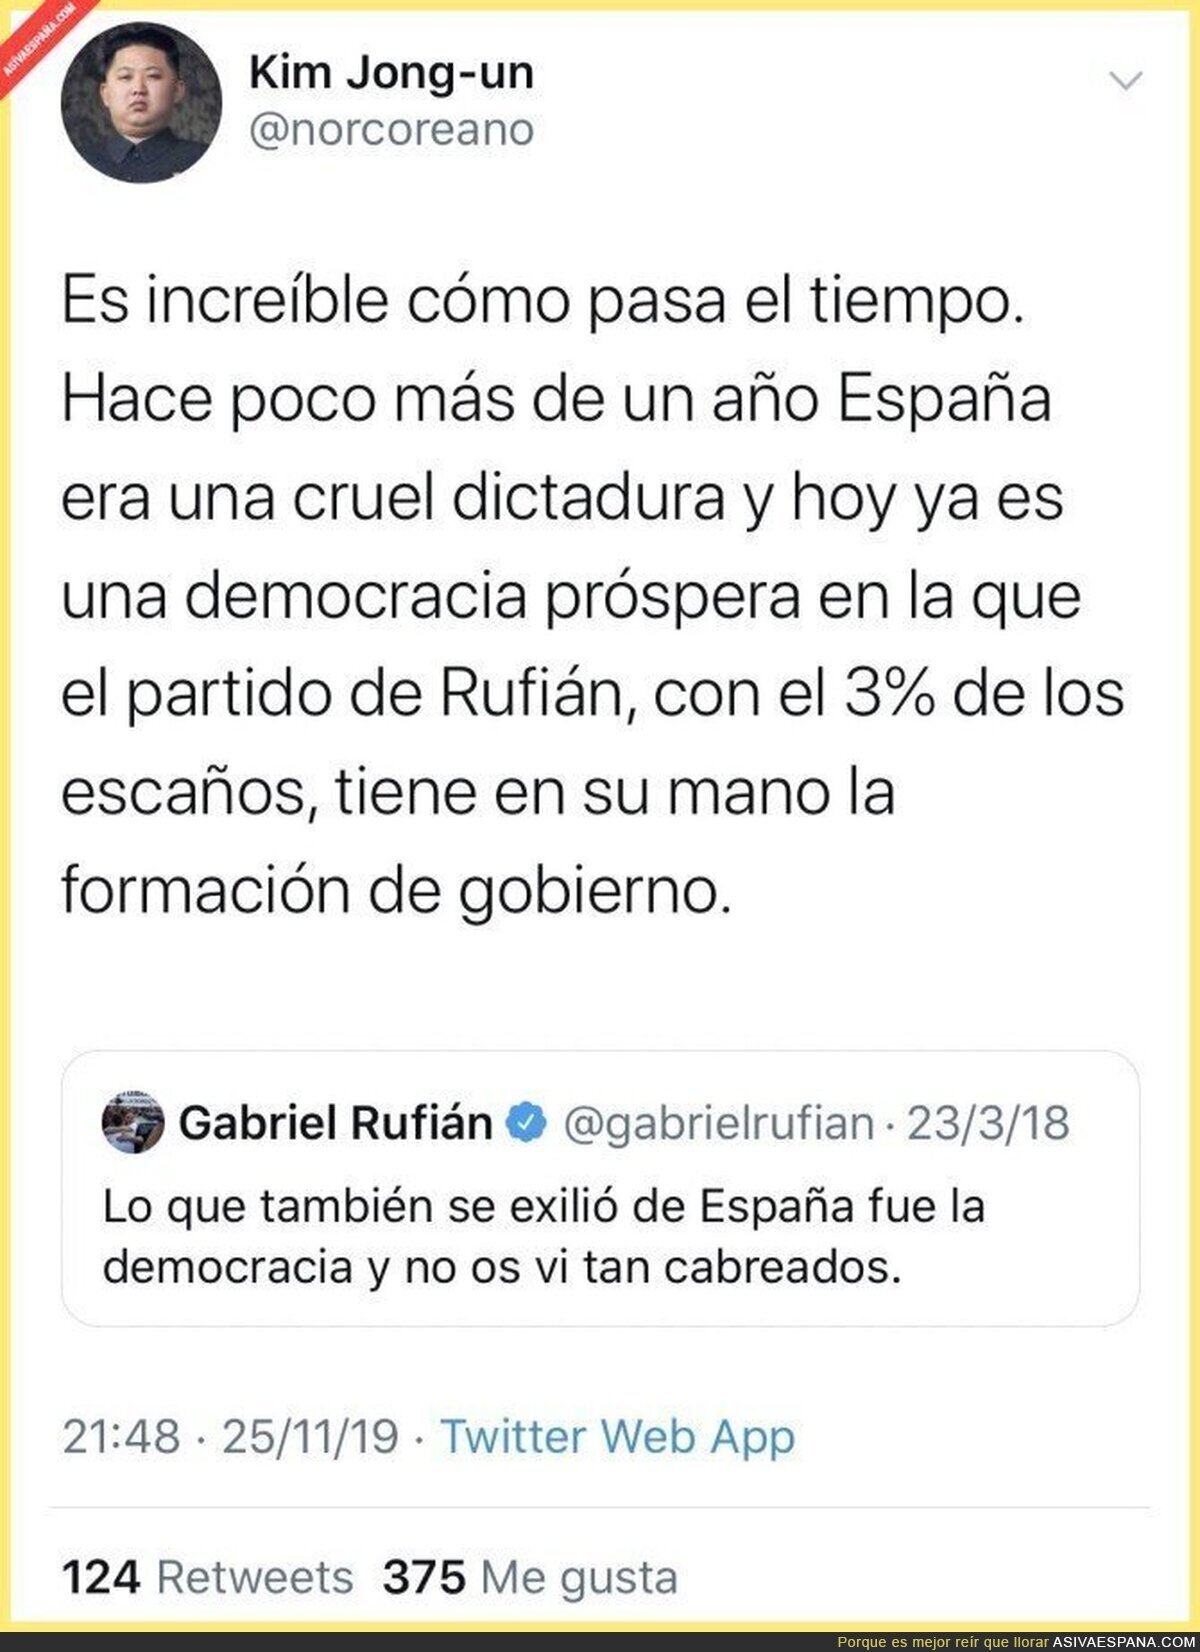 La dictadura española según Rufián